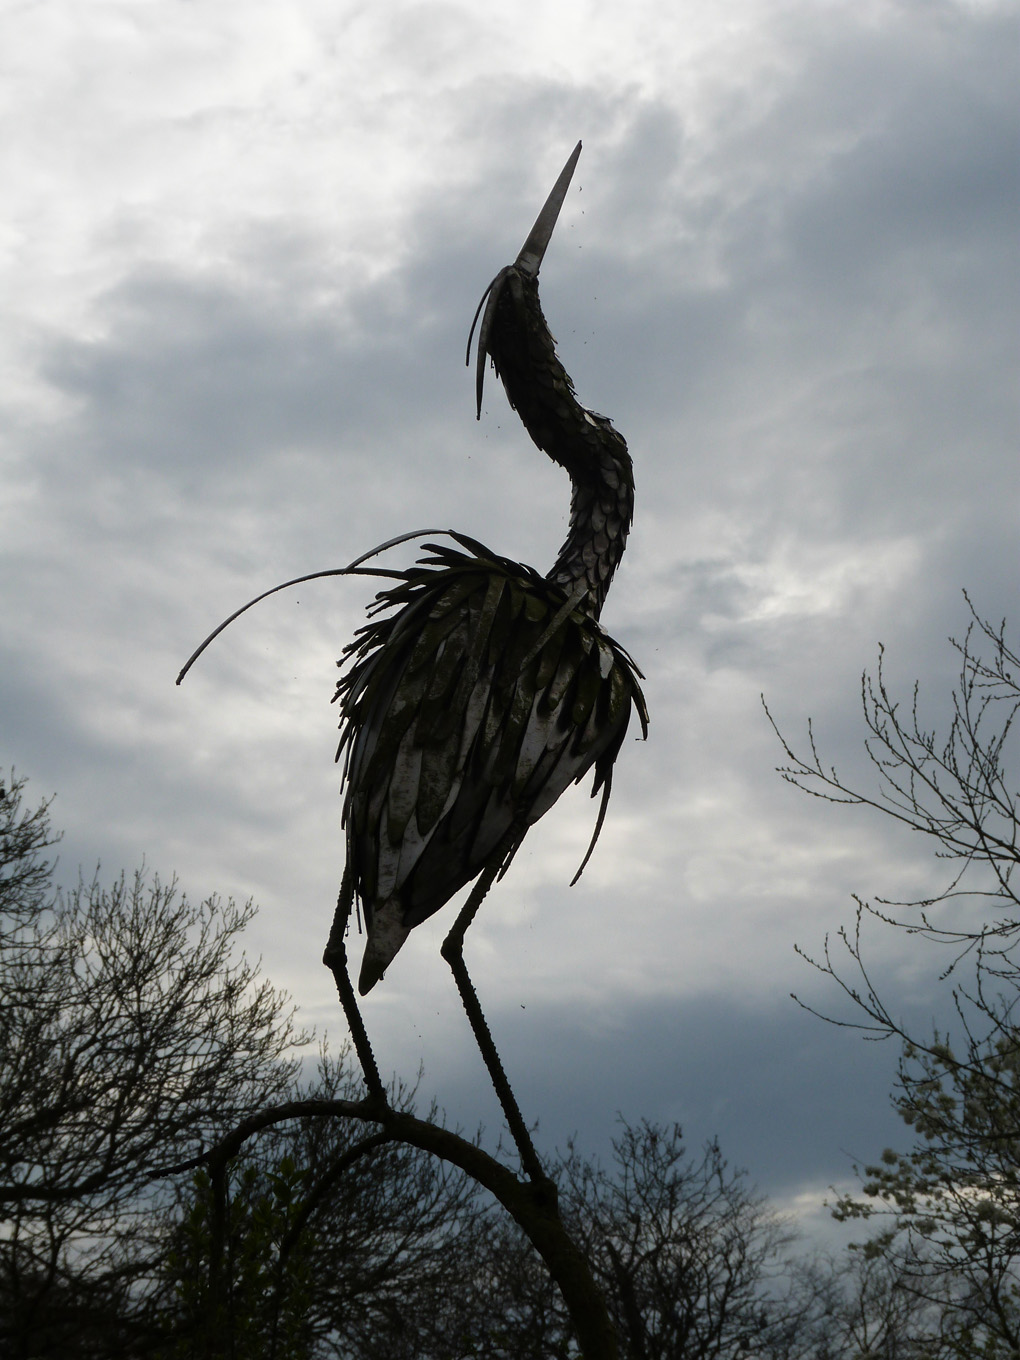 An ironwork sculpture of a heron (I think!) balances precariously against a bright sky.